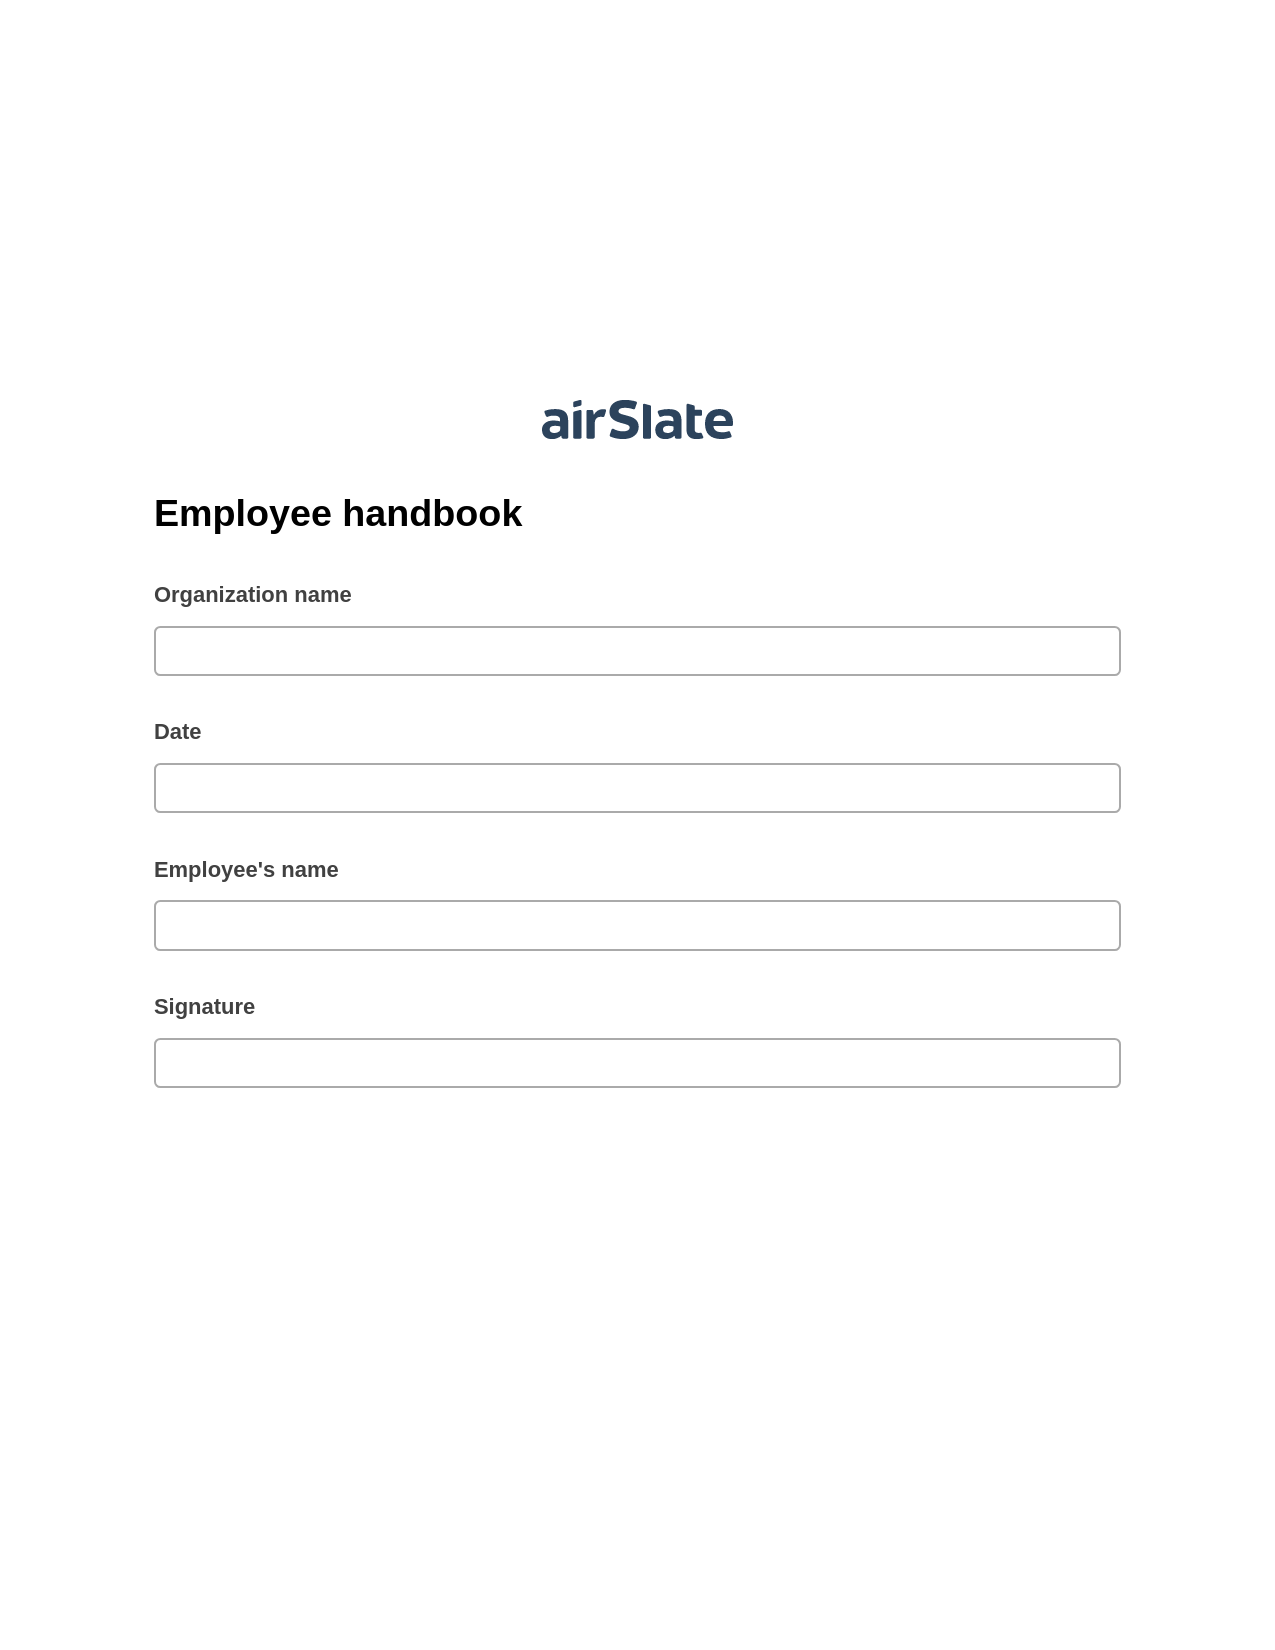 Multirole Employee handbook Pre-fill Slate from MS Dynamics 365 Records Bot, Update MS Dynamics 365 Records Bot, Google Drive Bot